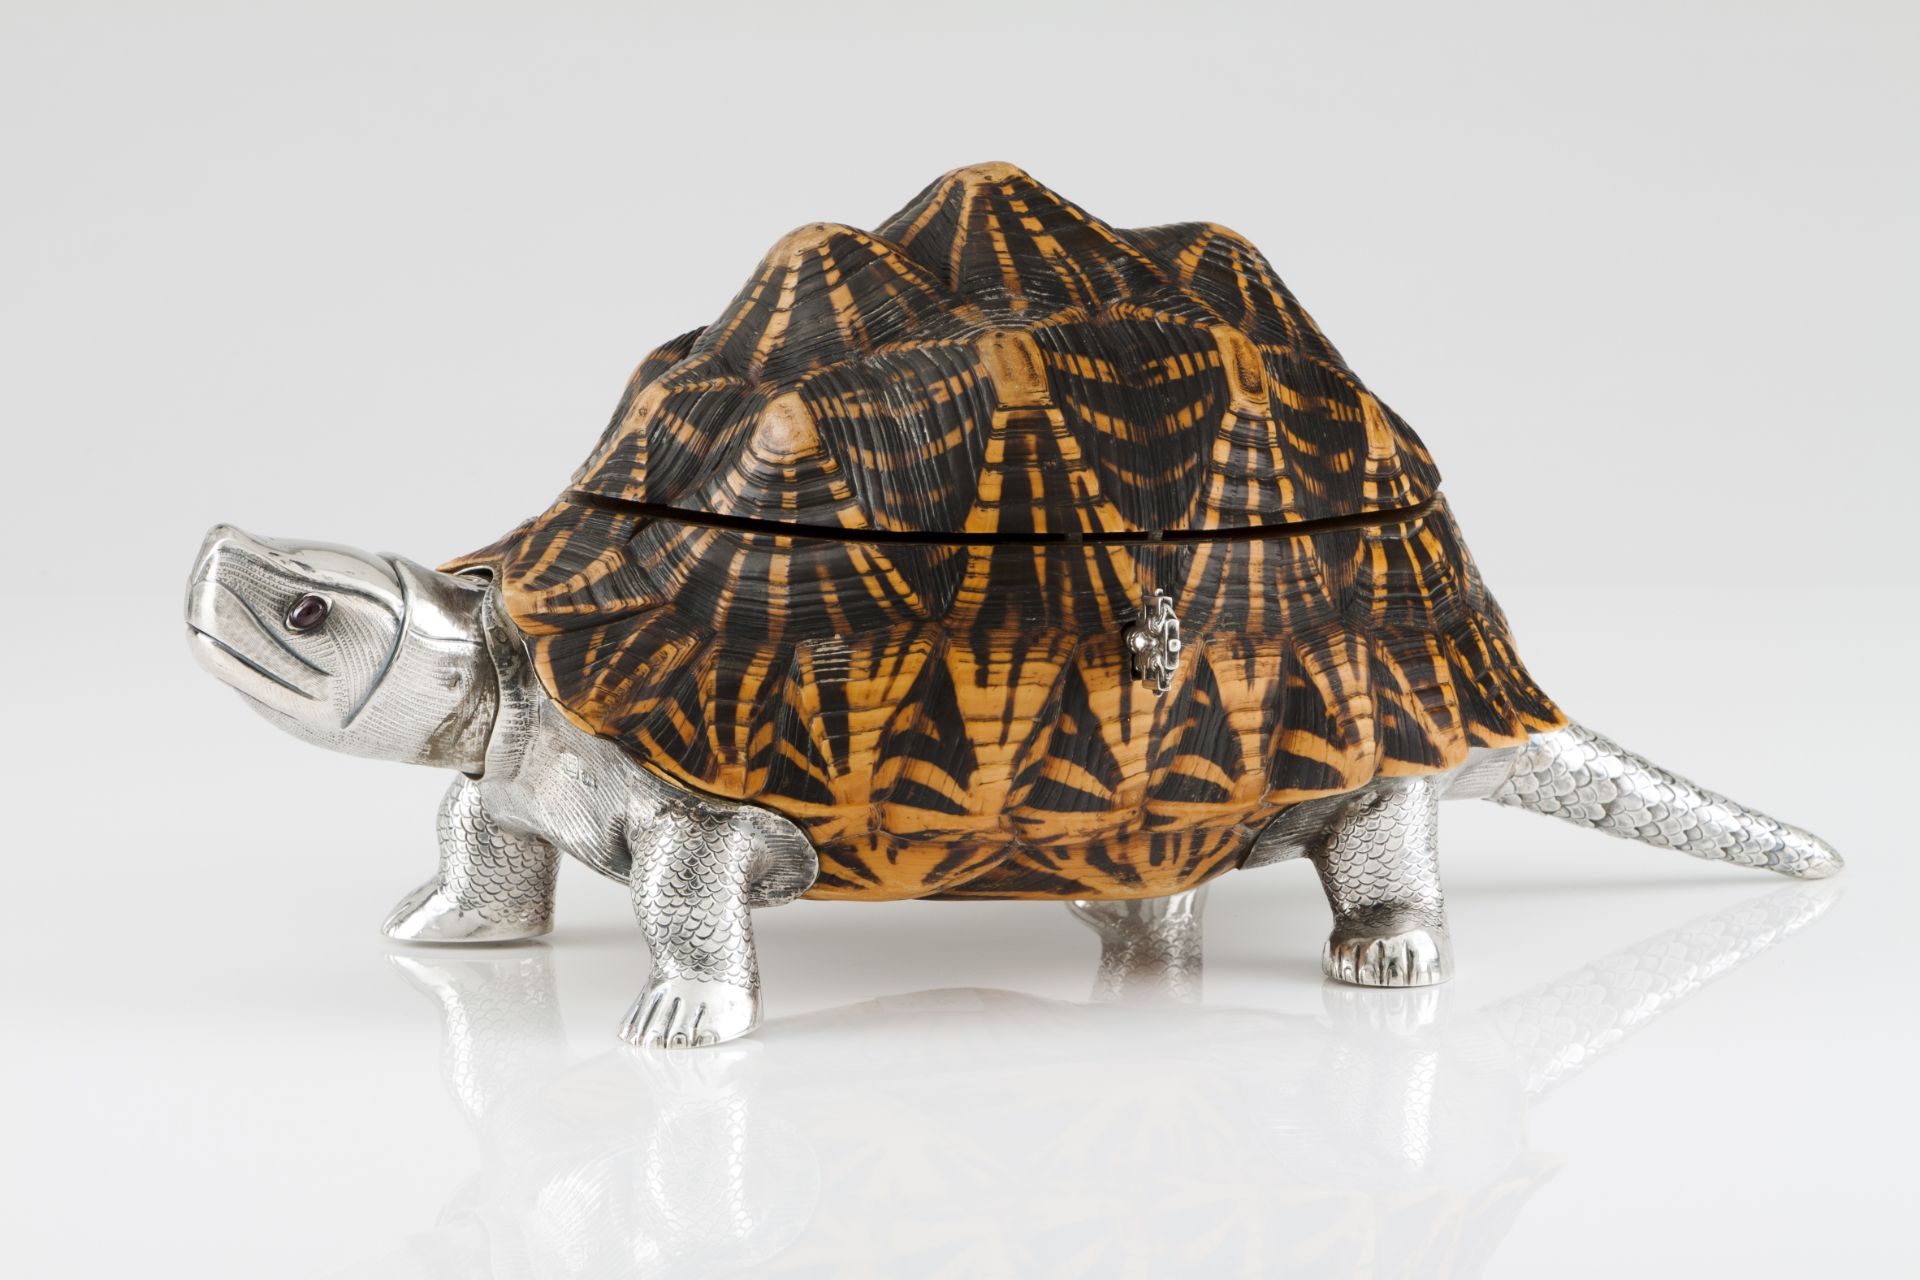 A large Luiz Ferreira tortoiseSilver sculptureShell adapted as jewellery casket of wood lined